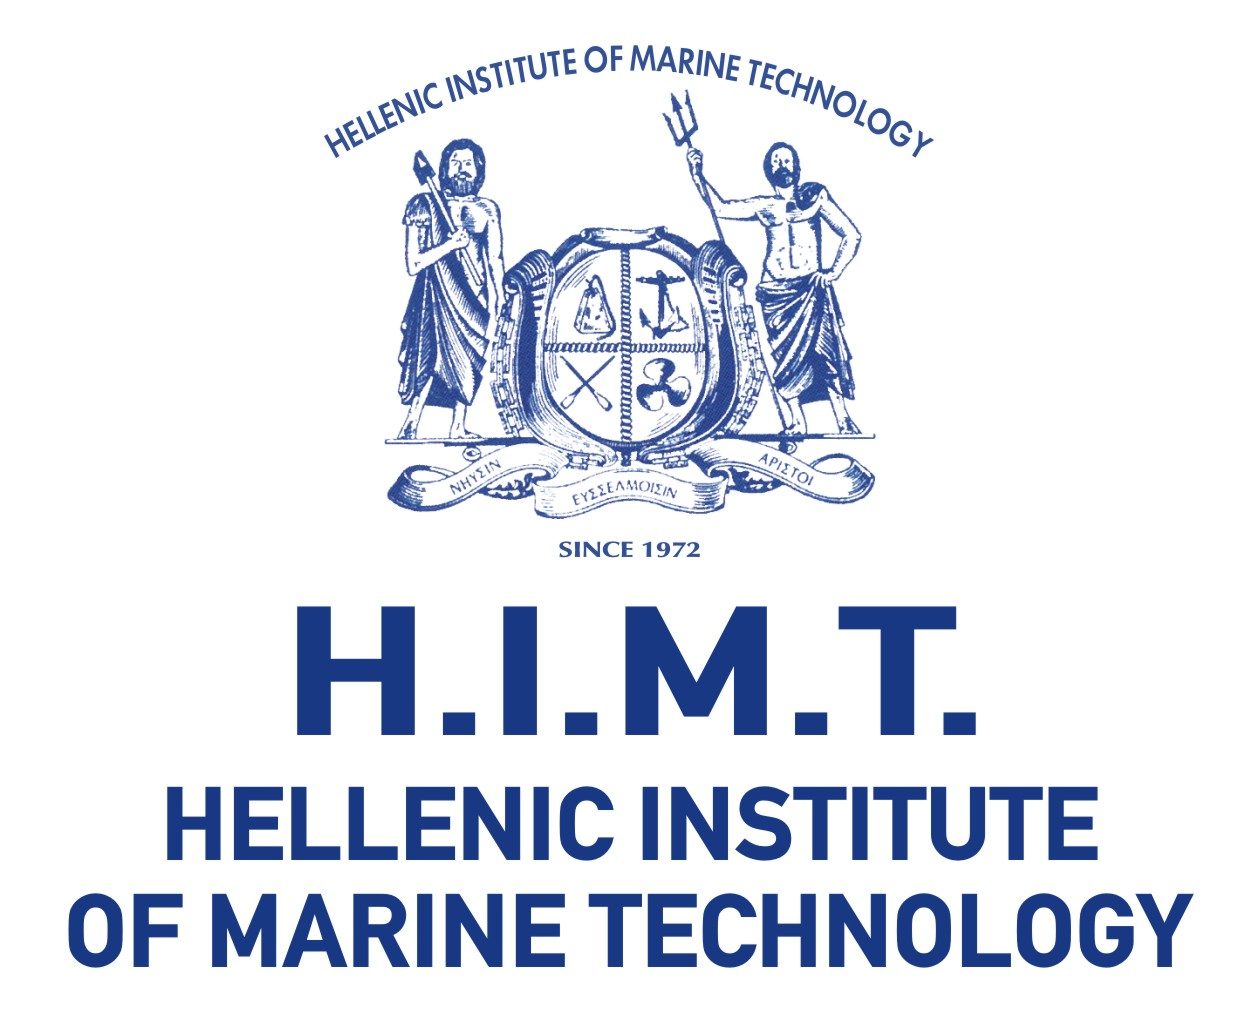 HELLENIC INSTITUTE OF MARINE TECHNOLOGY